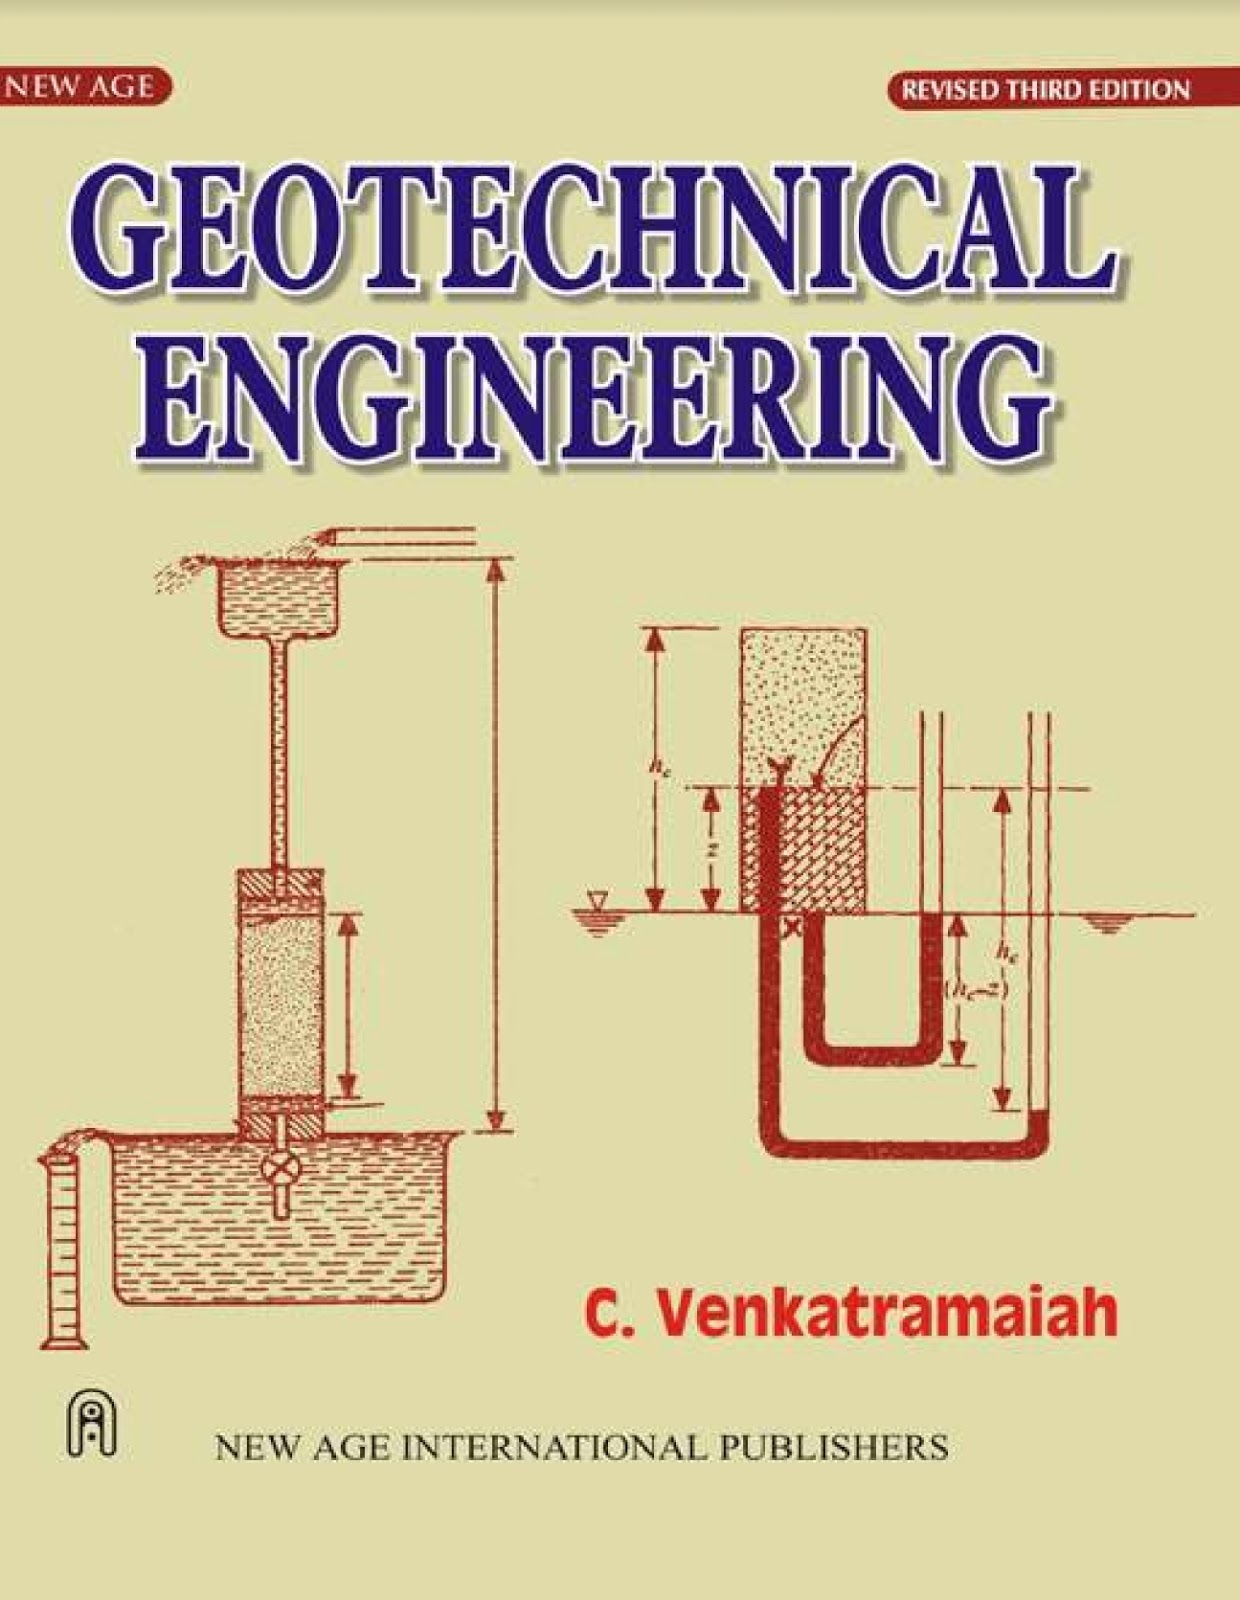 engineering materials by rangwala ebook free download